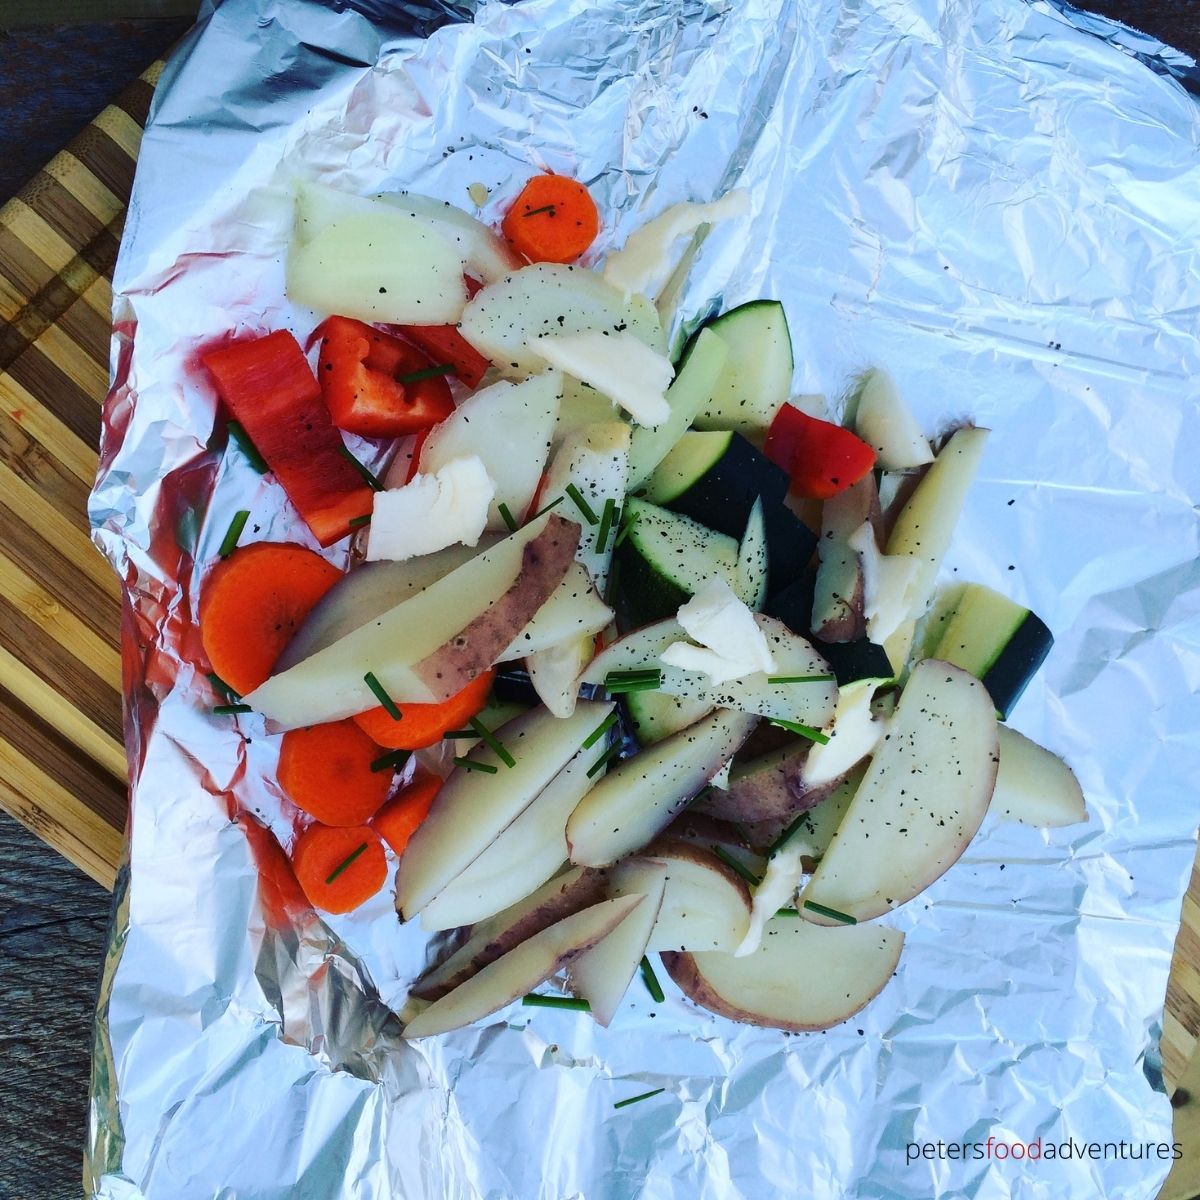 chopped vegetables in foil for grilling